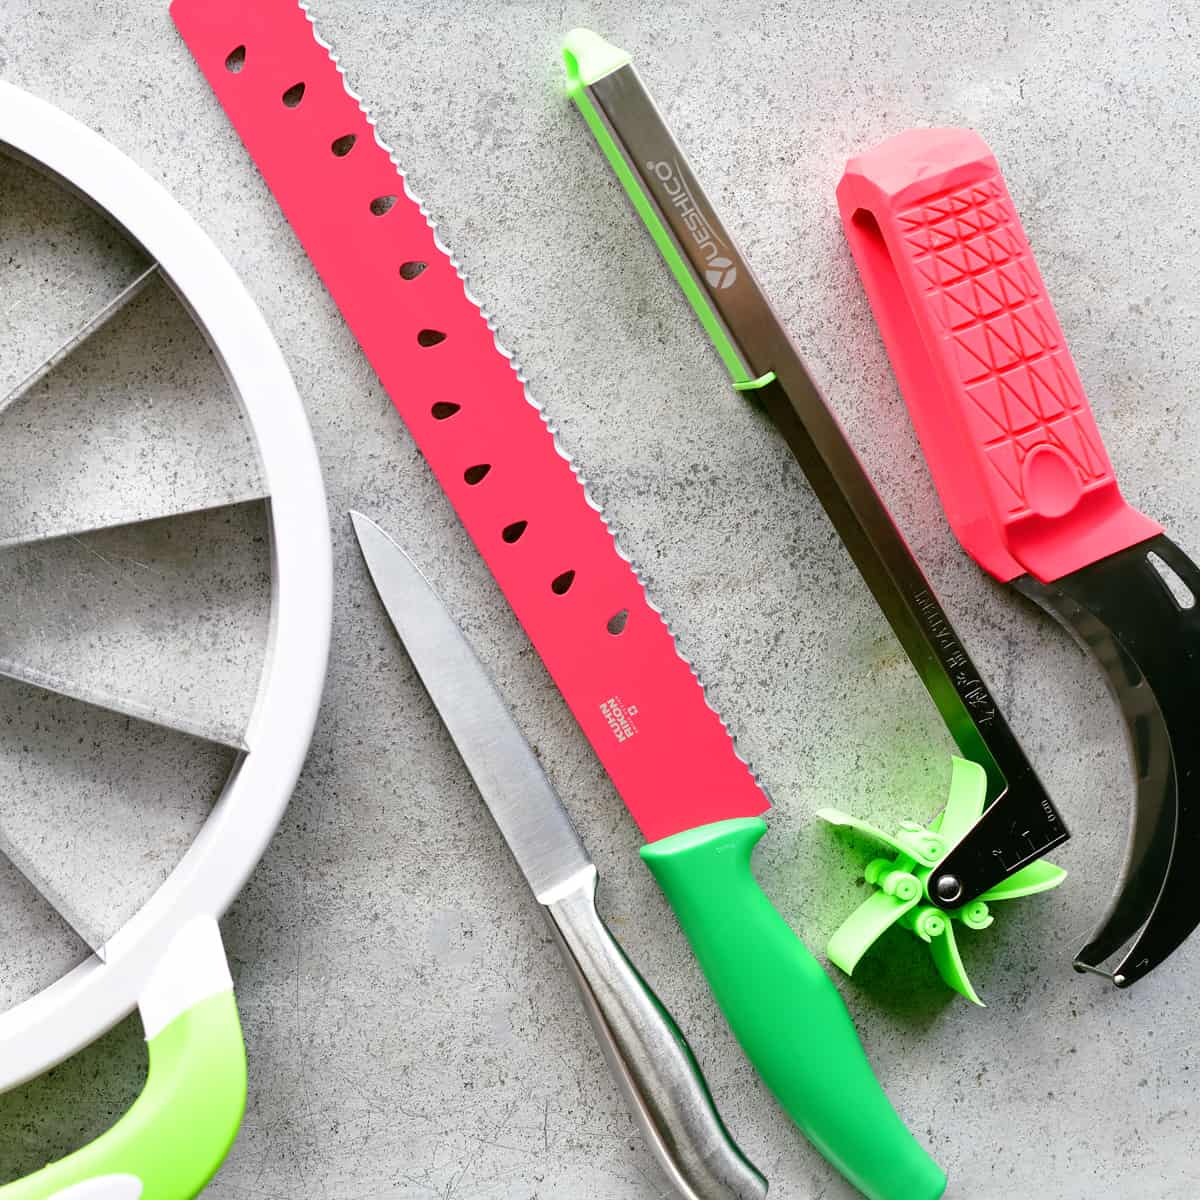 Watermelon slicer tools.